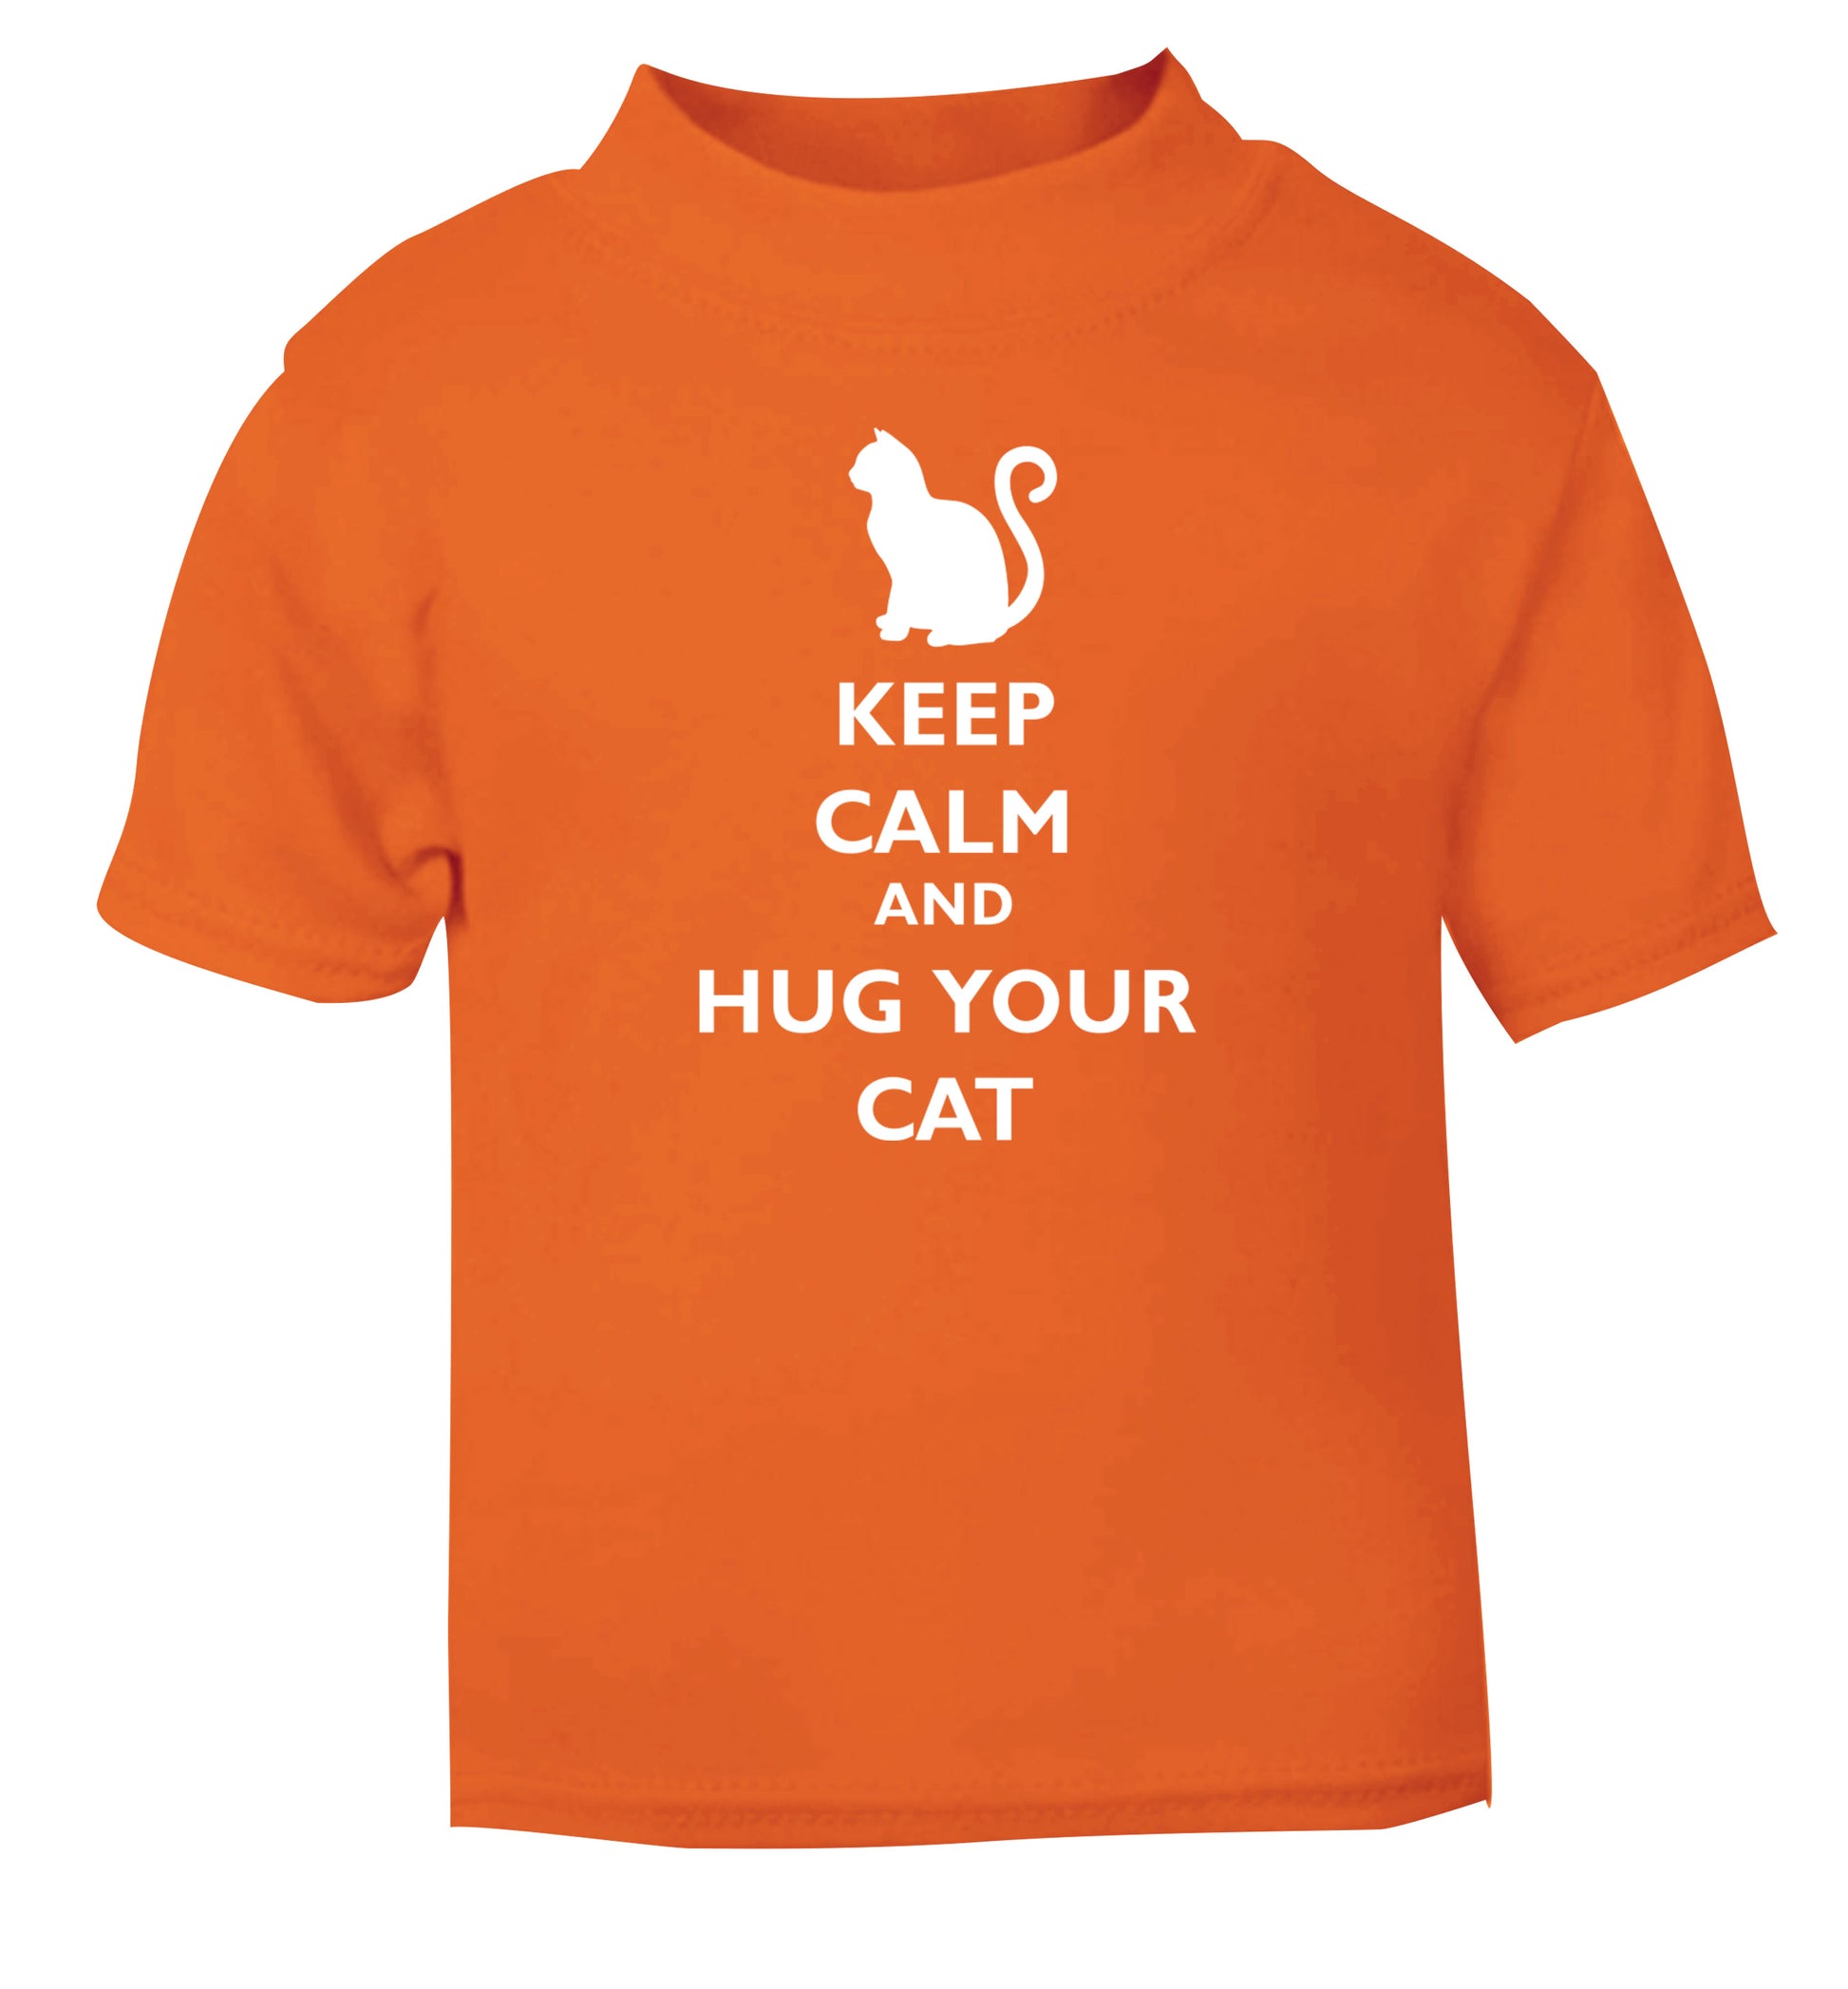 Keep calm and hug your cat orange Baby Toddler Tshirt 2 Years